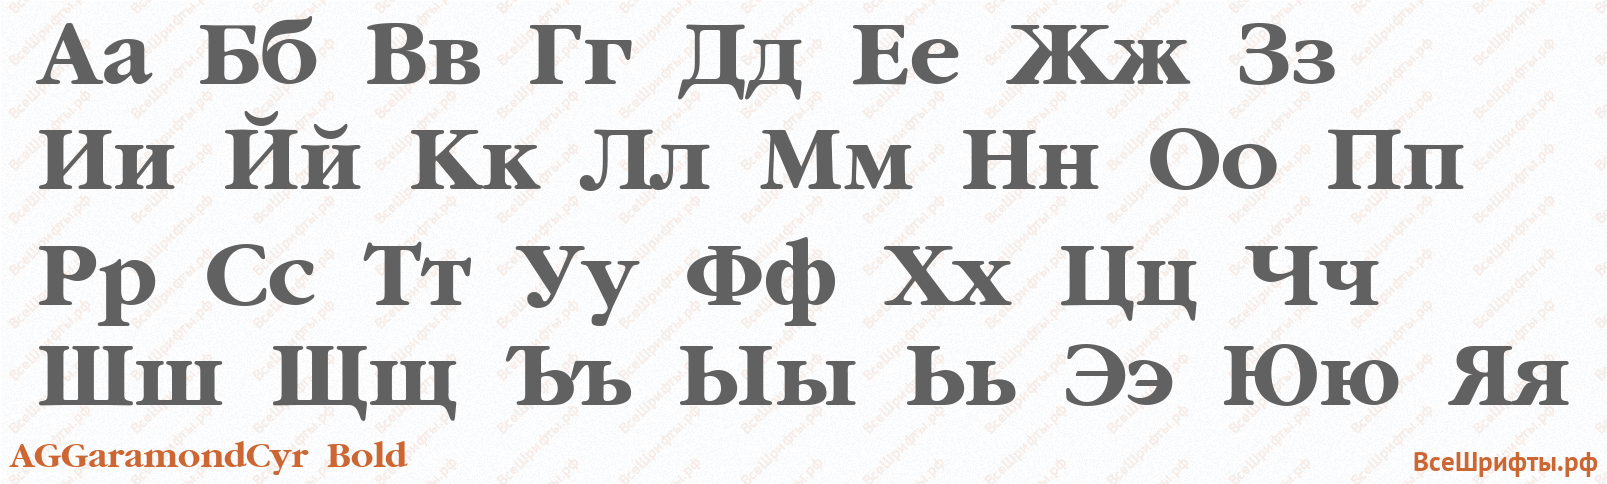 Шрифт AGGaramondCyr Bold с русскими буквами